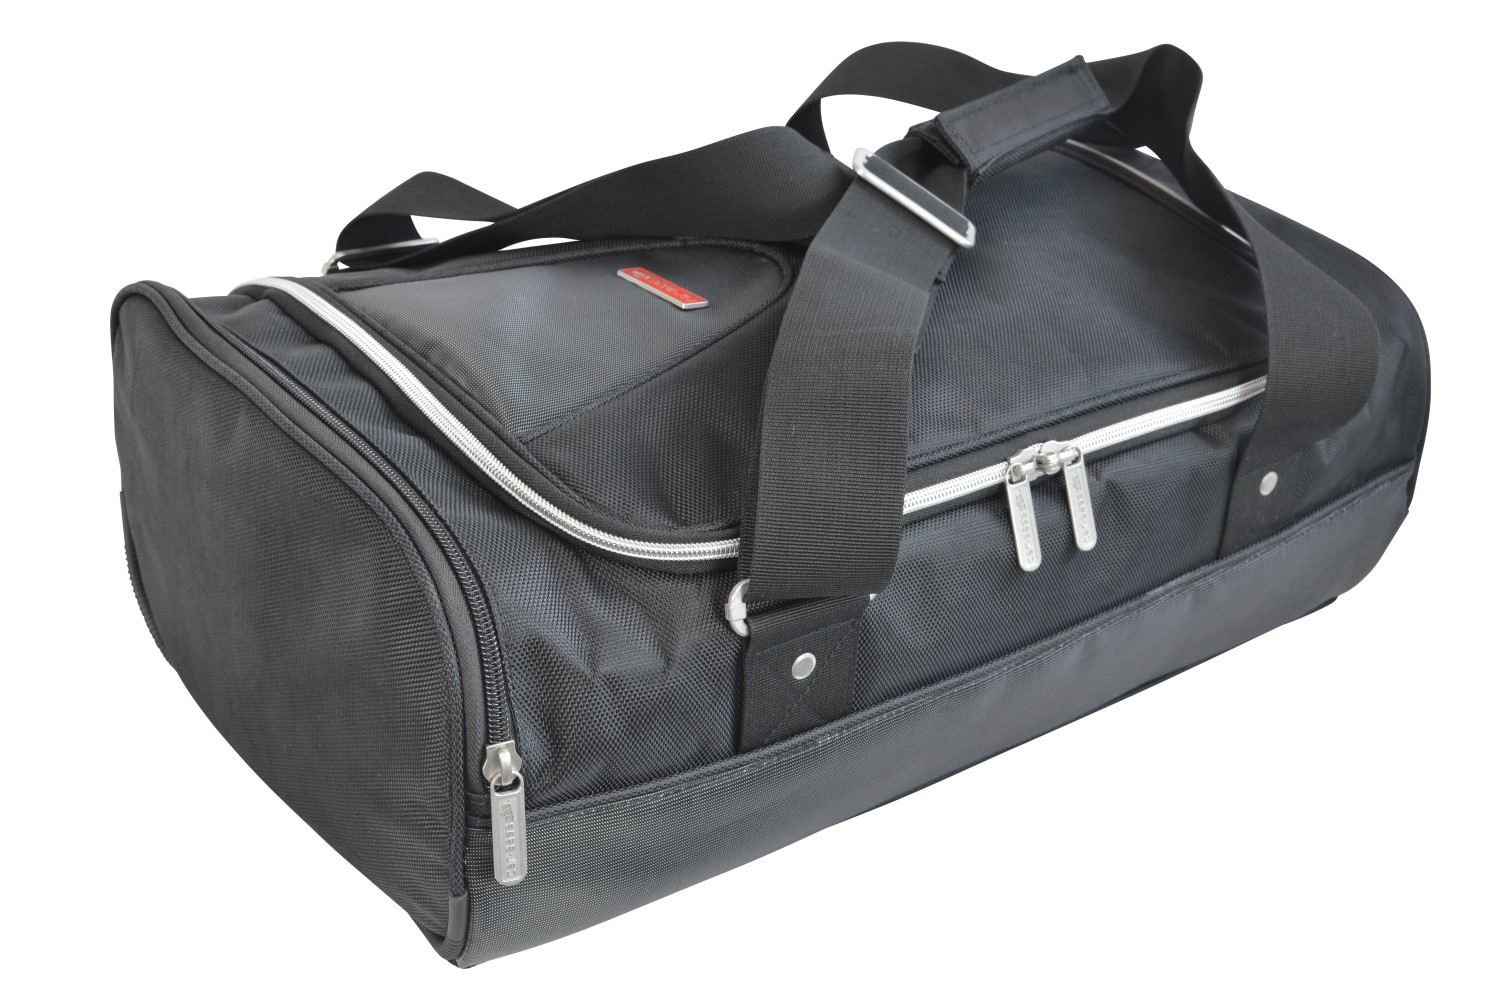 Travel bag - 32x17x65 cm (W x H x L)